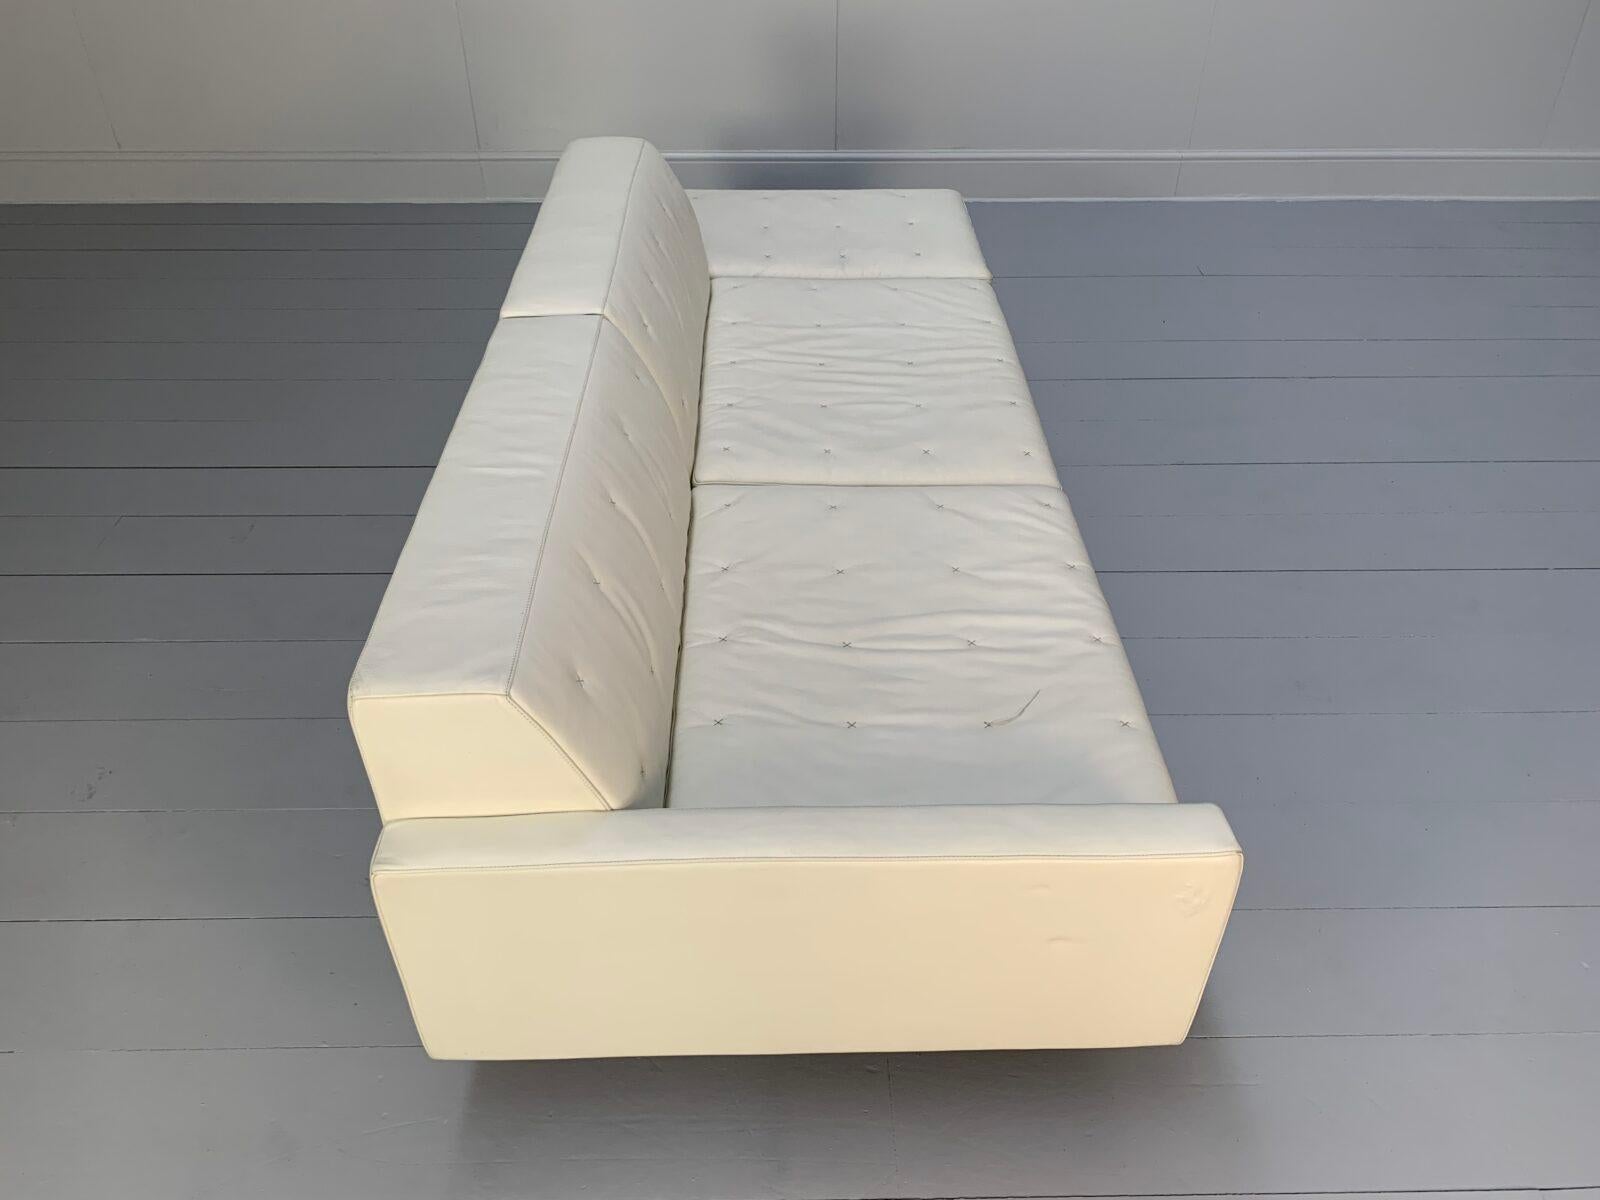 Poltrona Frau “Kennedee” 3-Seat Sofa – In Ivory “Pelle Frau” Leather For Sale 2